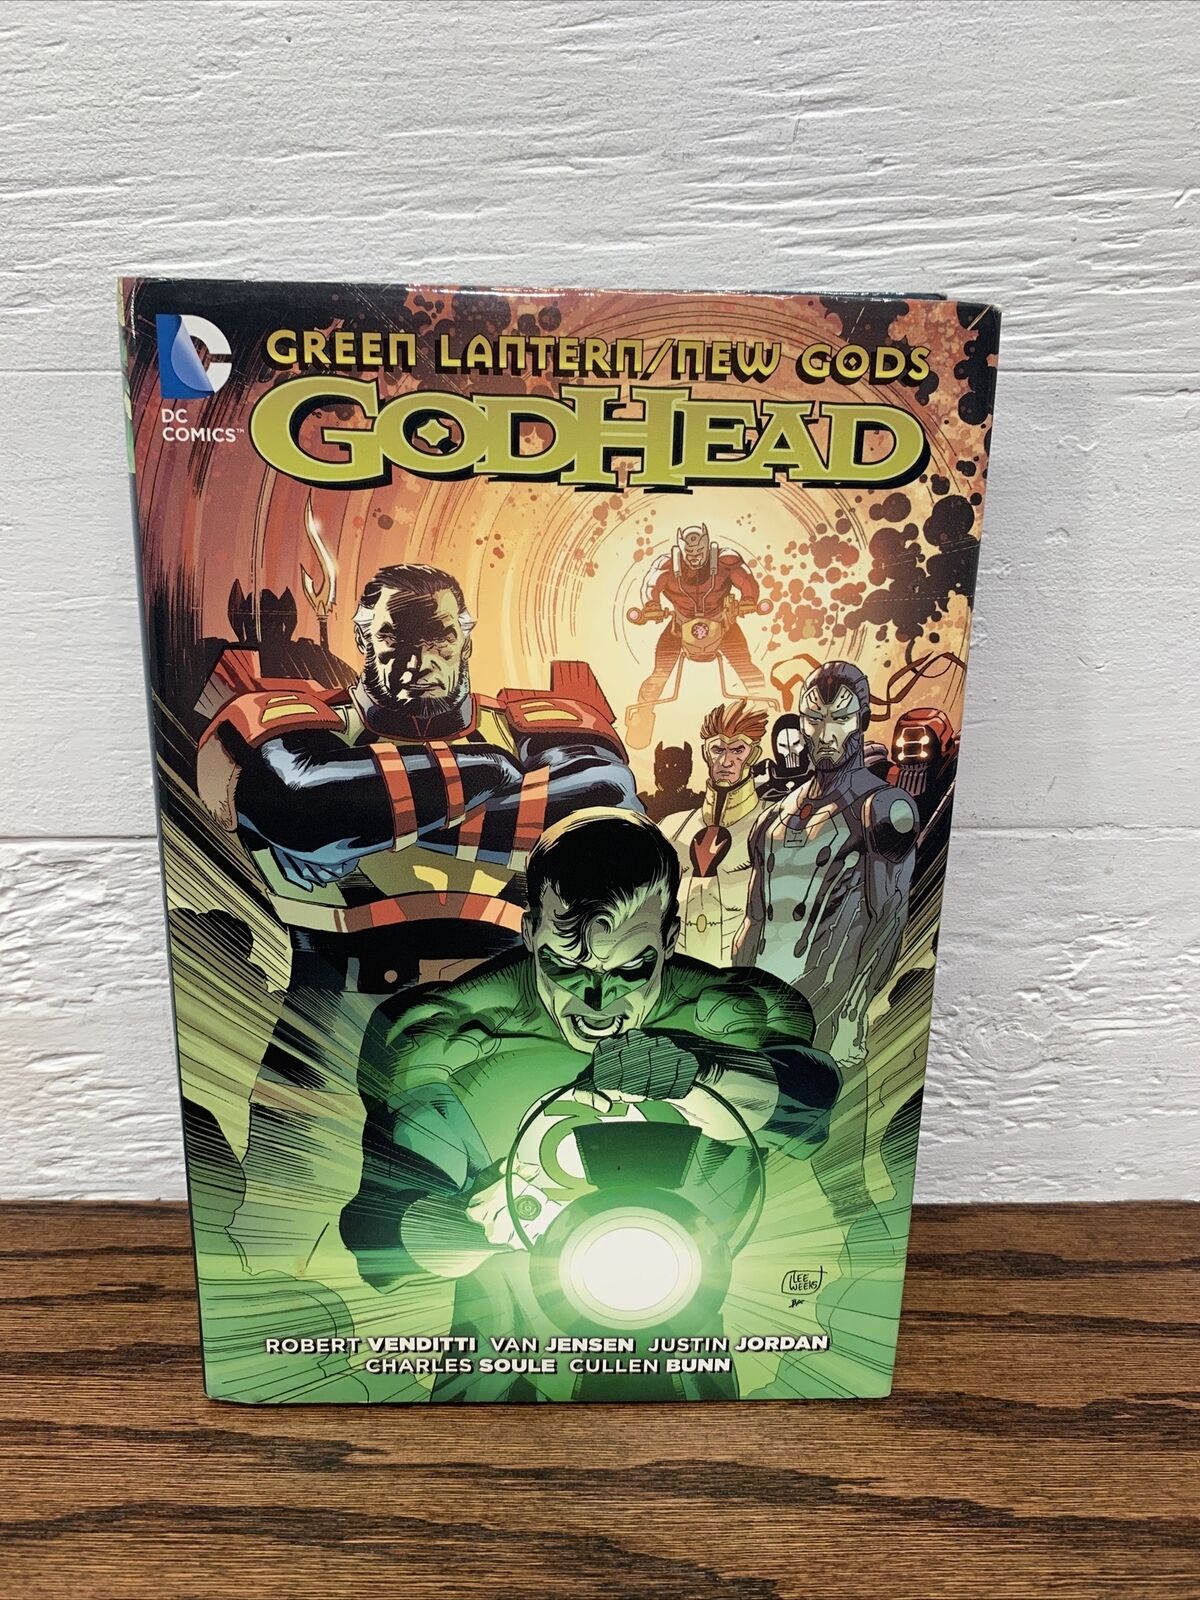 Green Lantern / New Gods: Godhead (DC Comics Great Condition